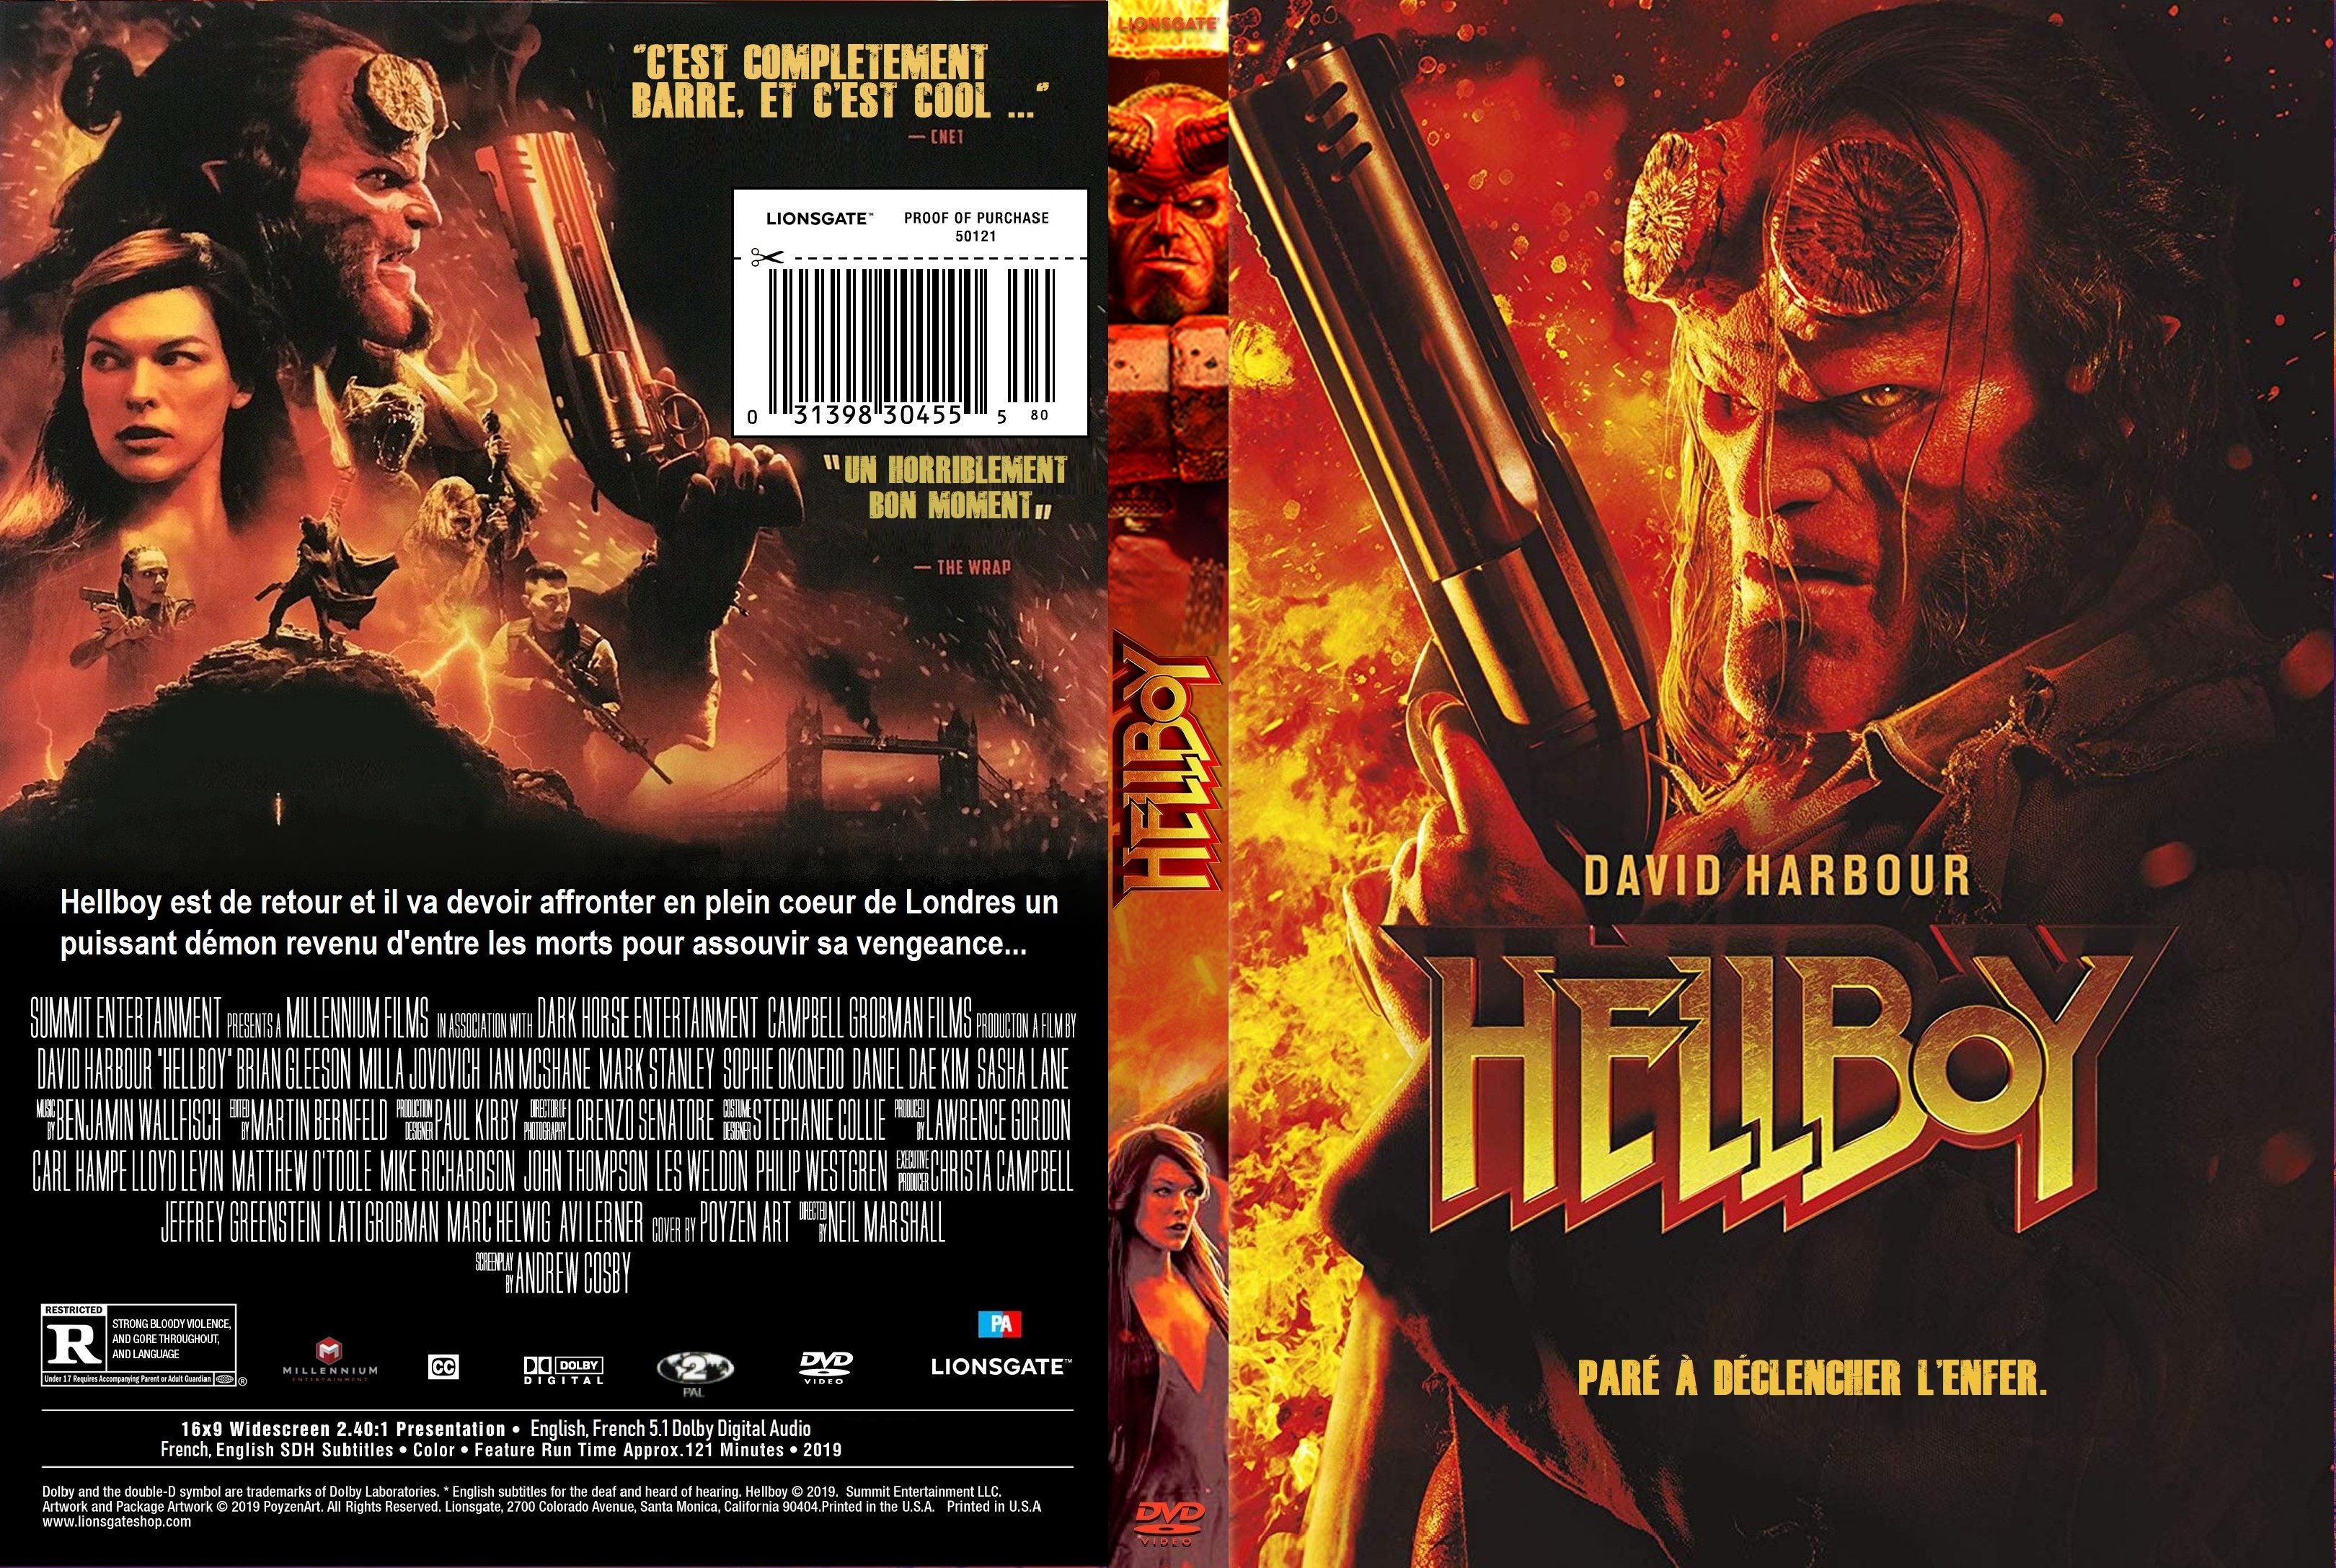 Jaquette DVD Hellboy (2019) custom v2